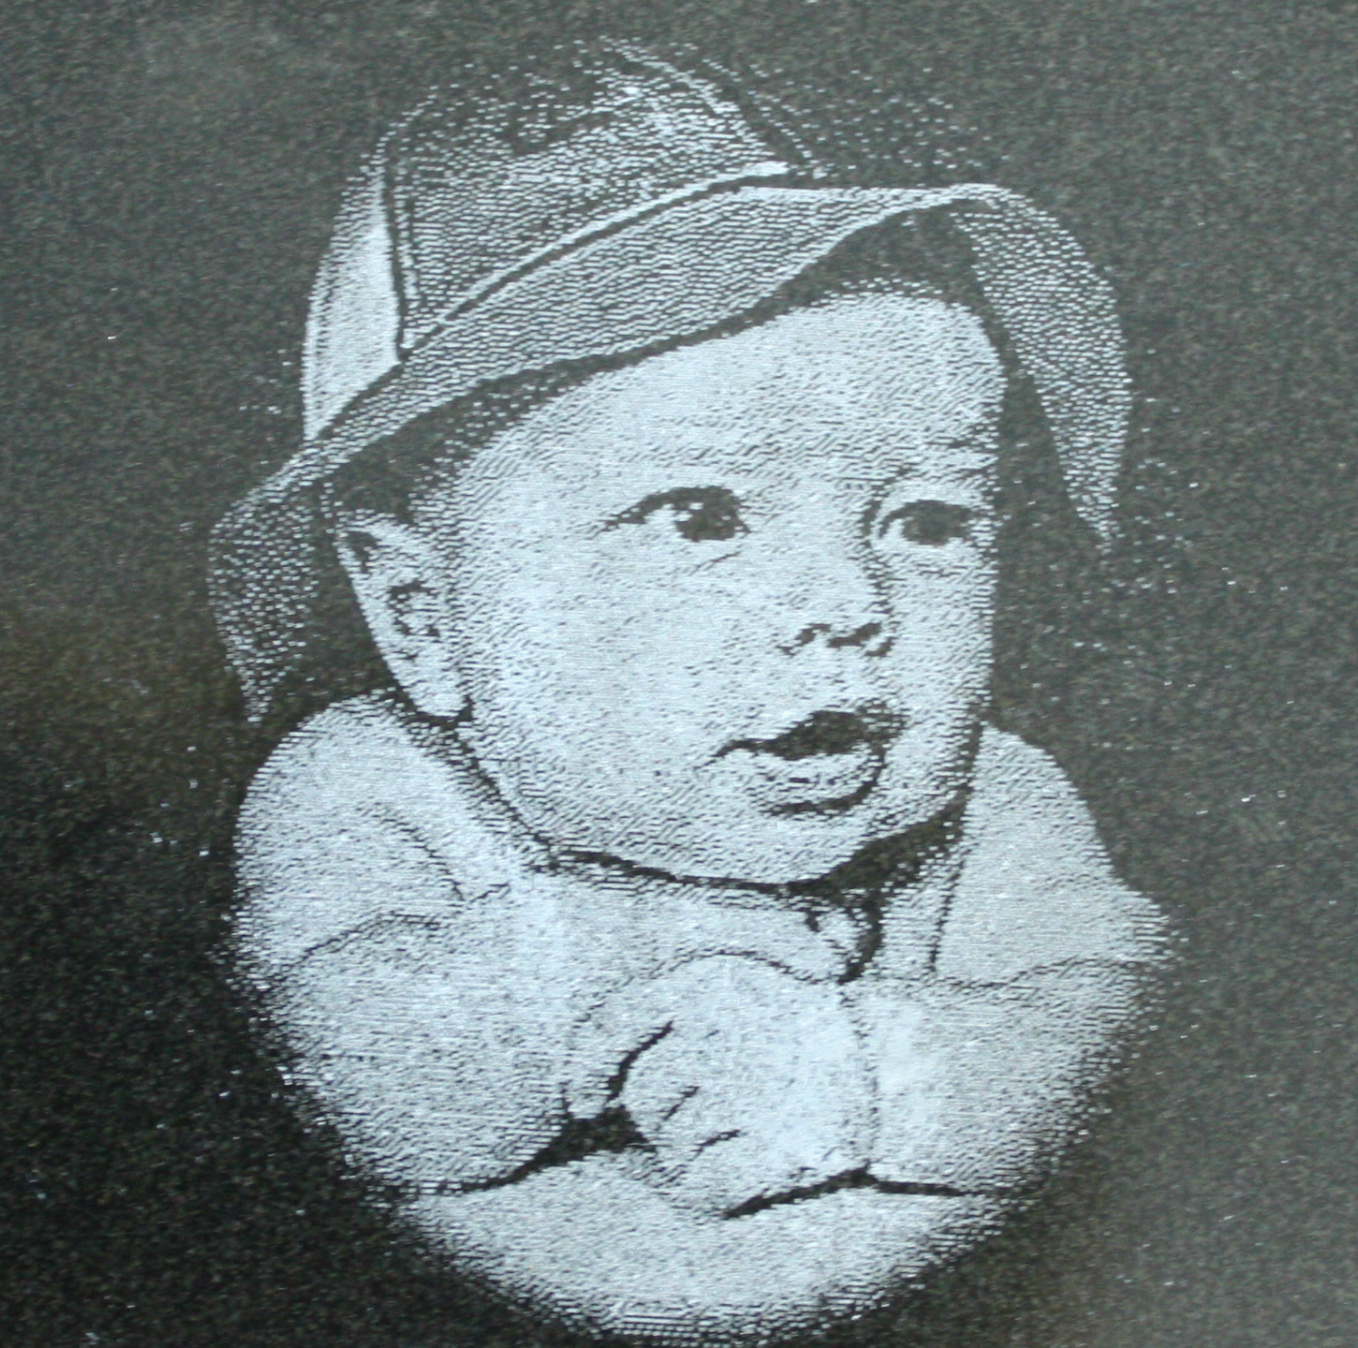 Cute baby etched in black granite.